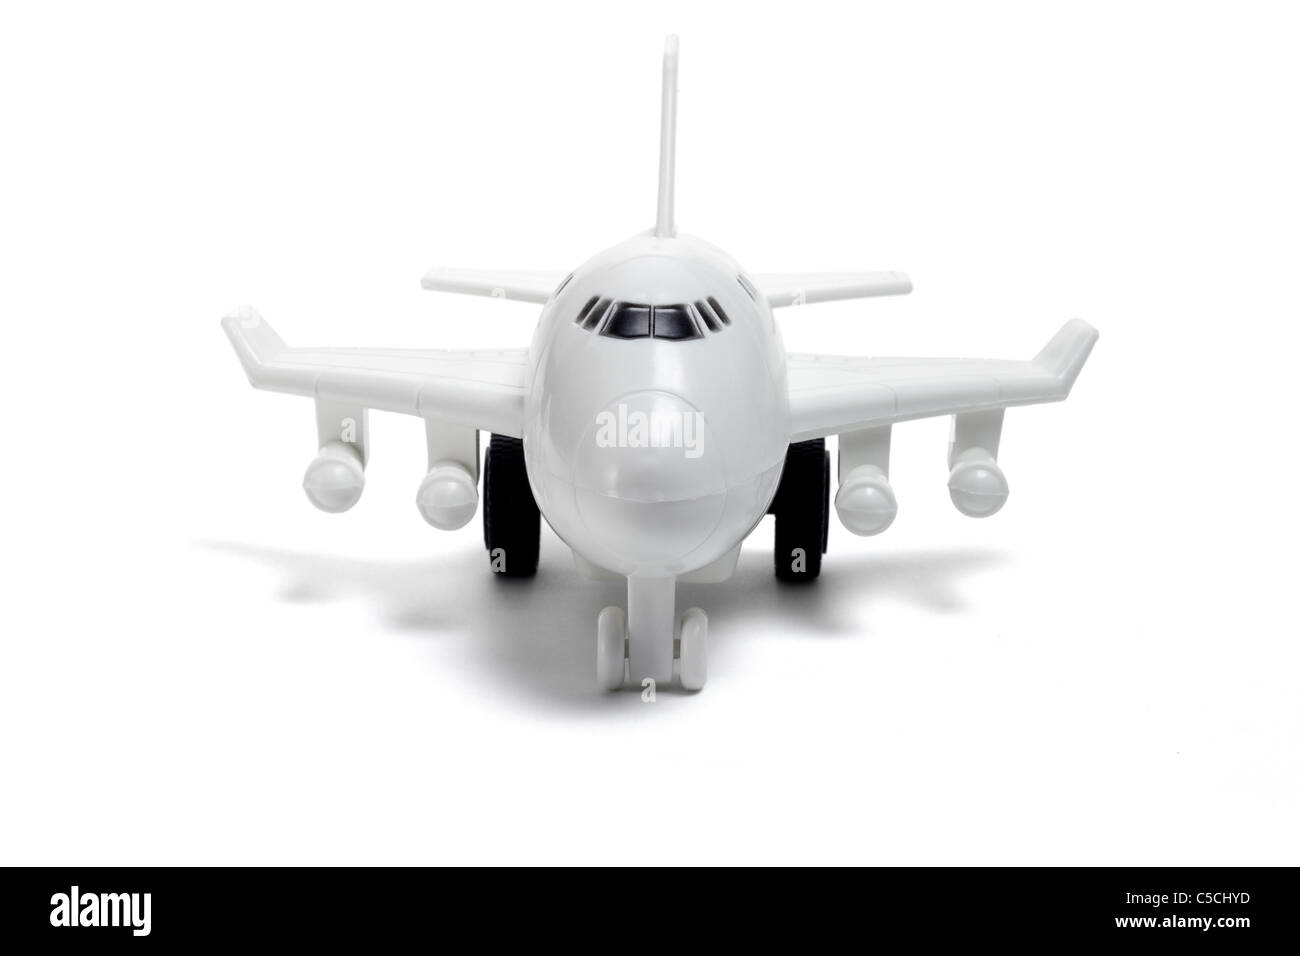 Plastic toy jet plane on white background Stock Photo